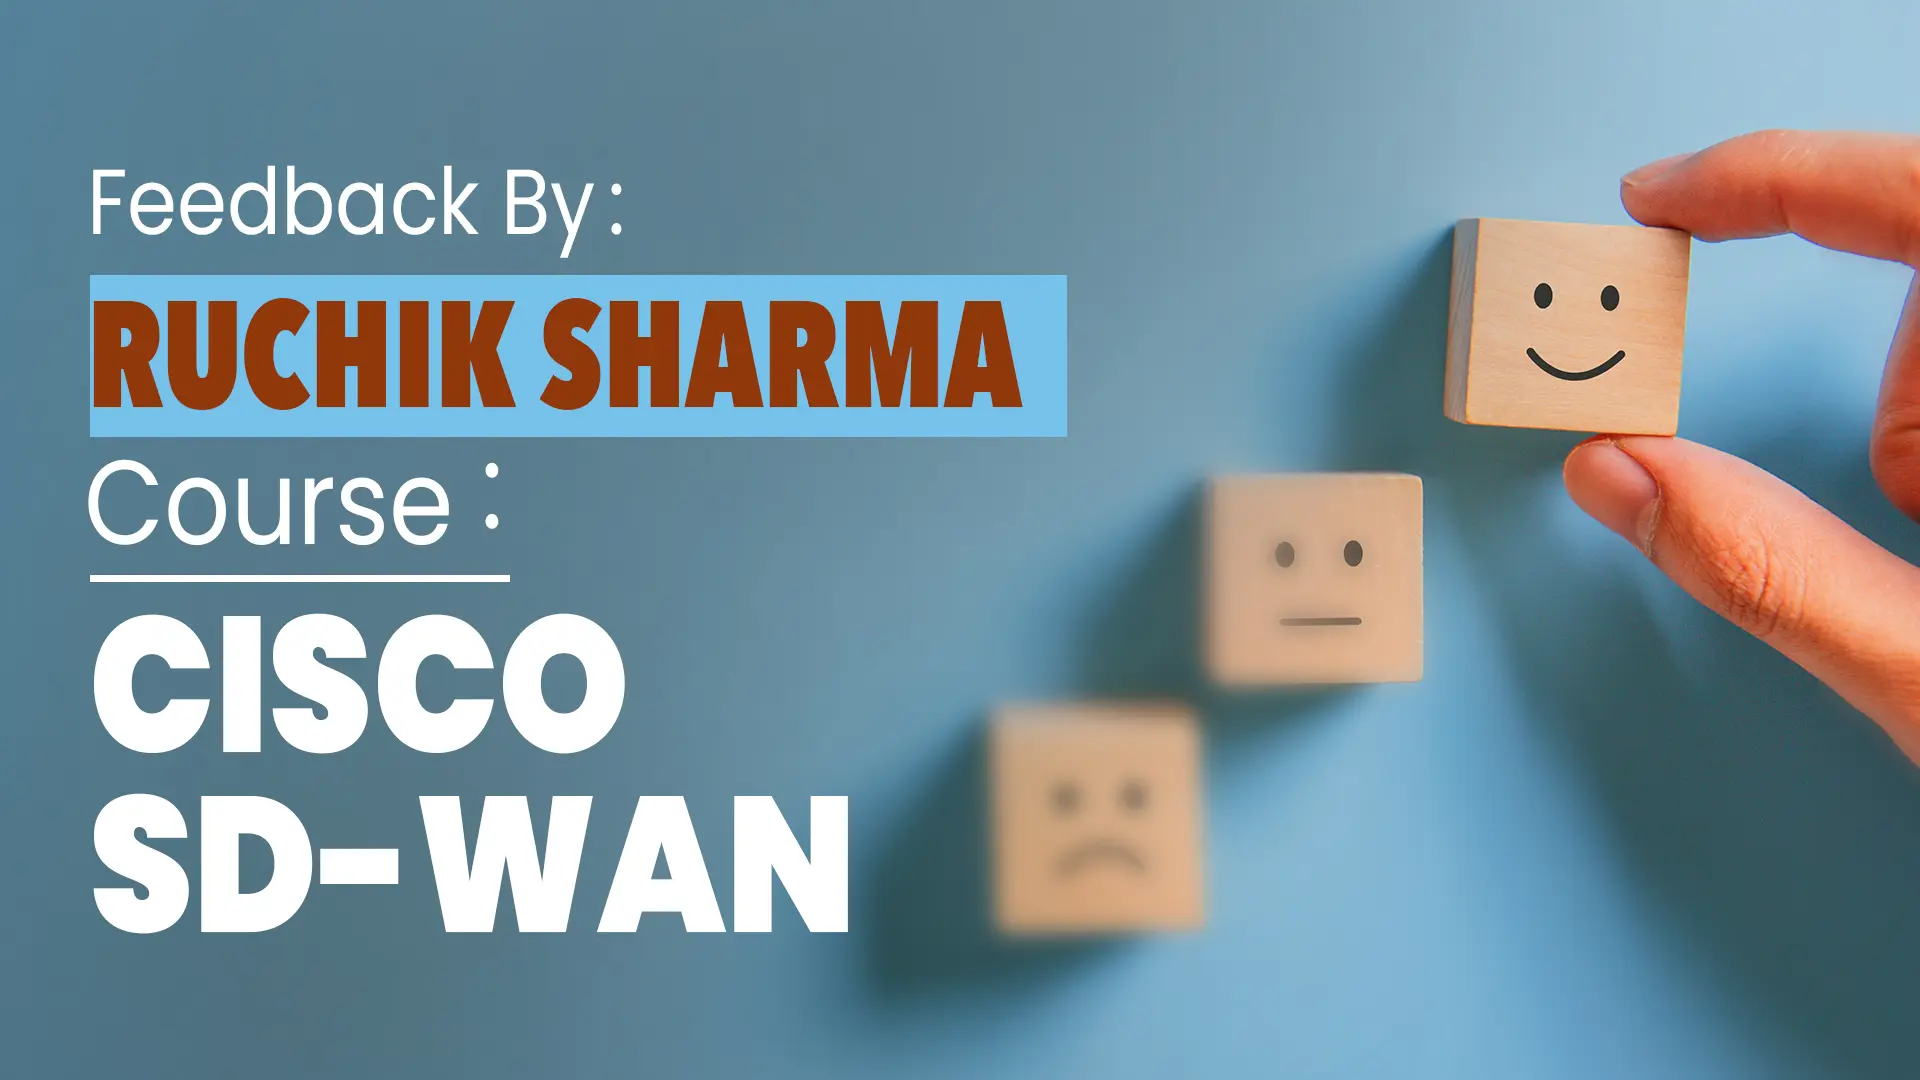 Feedback from Ruchik-Sharma for SD-WAN course